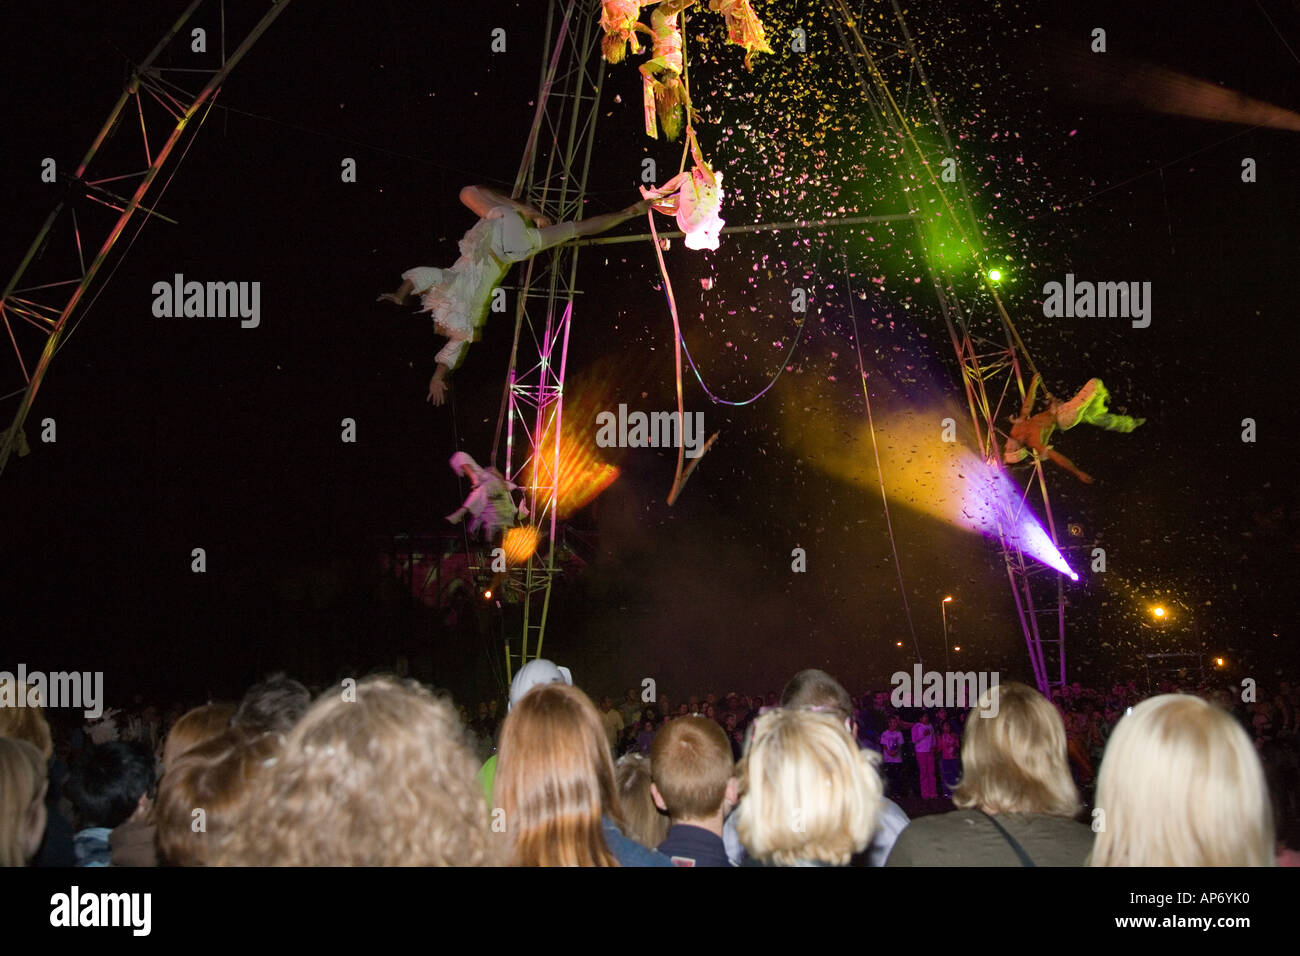 Aerialist Circus performers with aerial straps, of the Circo da Madrugada - Caiu do Ceu Brazil, Stockton International Riverside Festival UK Stock Photo